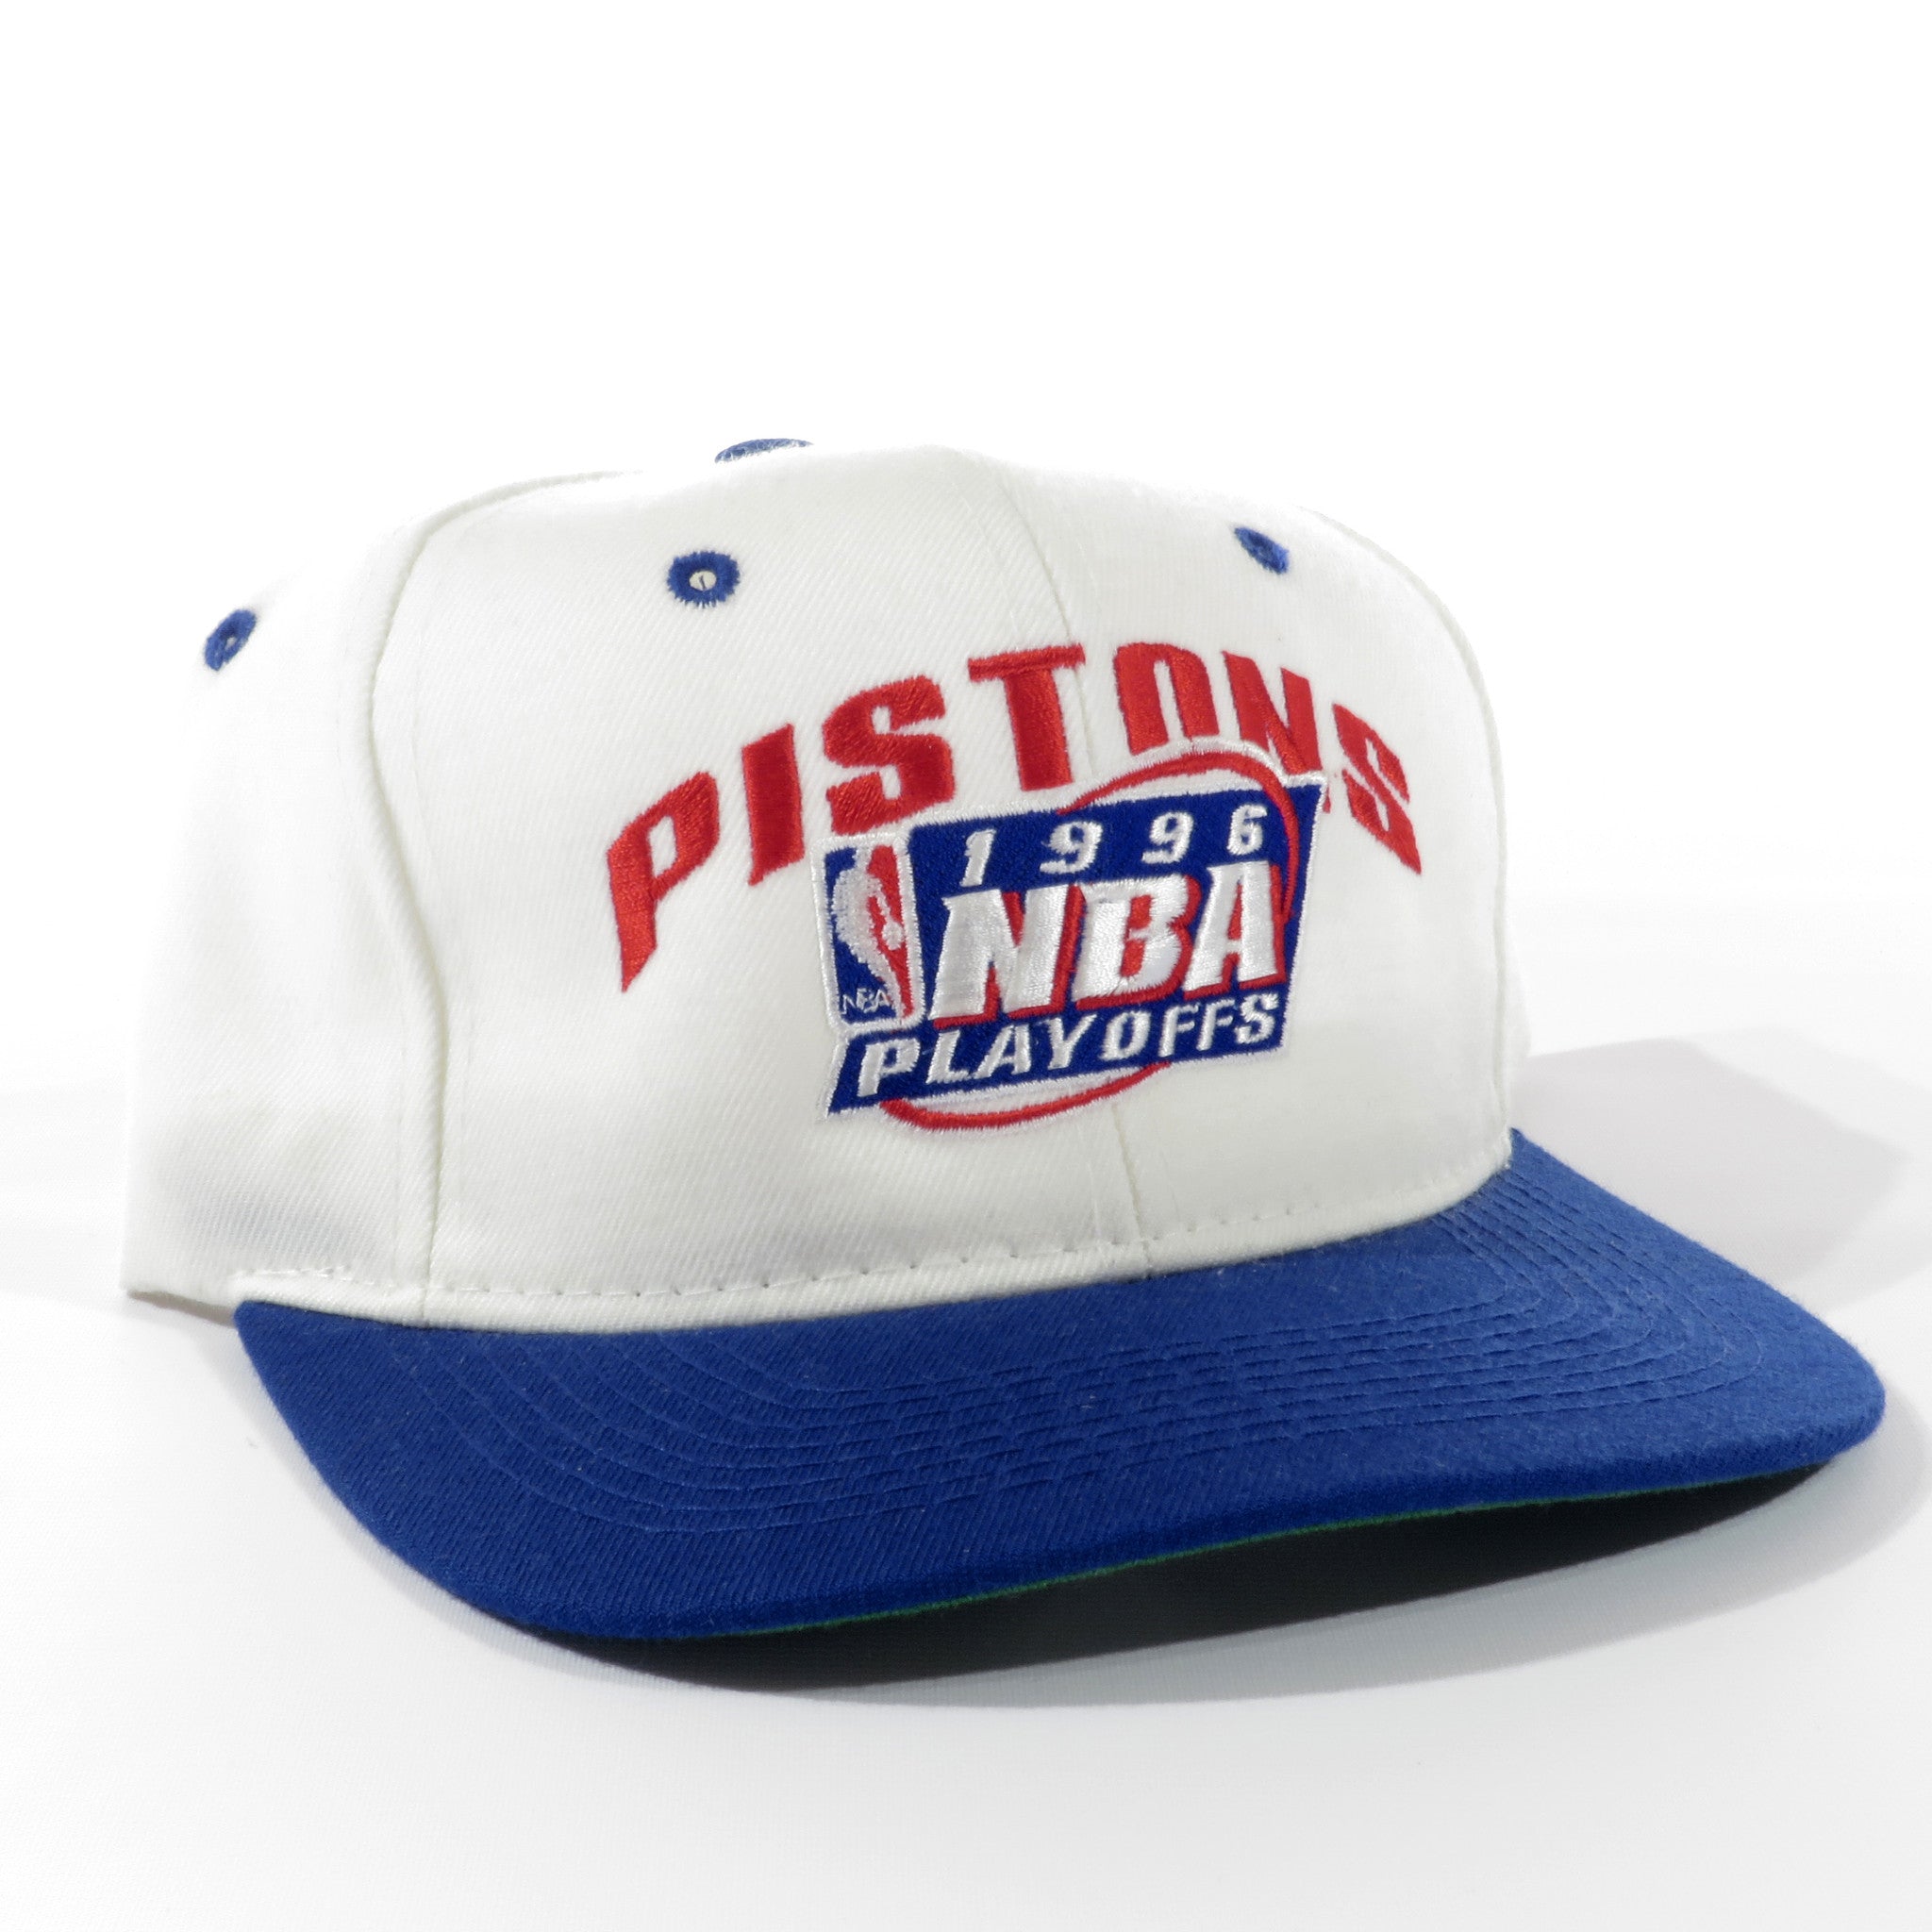 Vintage 1996 Detroit Pistons NBA Playoffs Snapback Hat